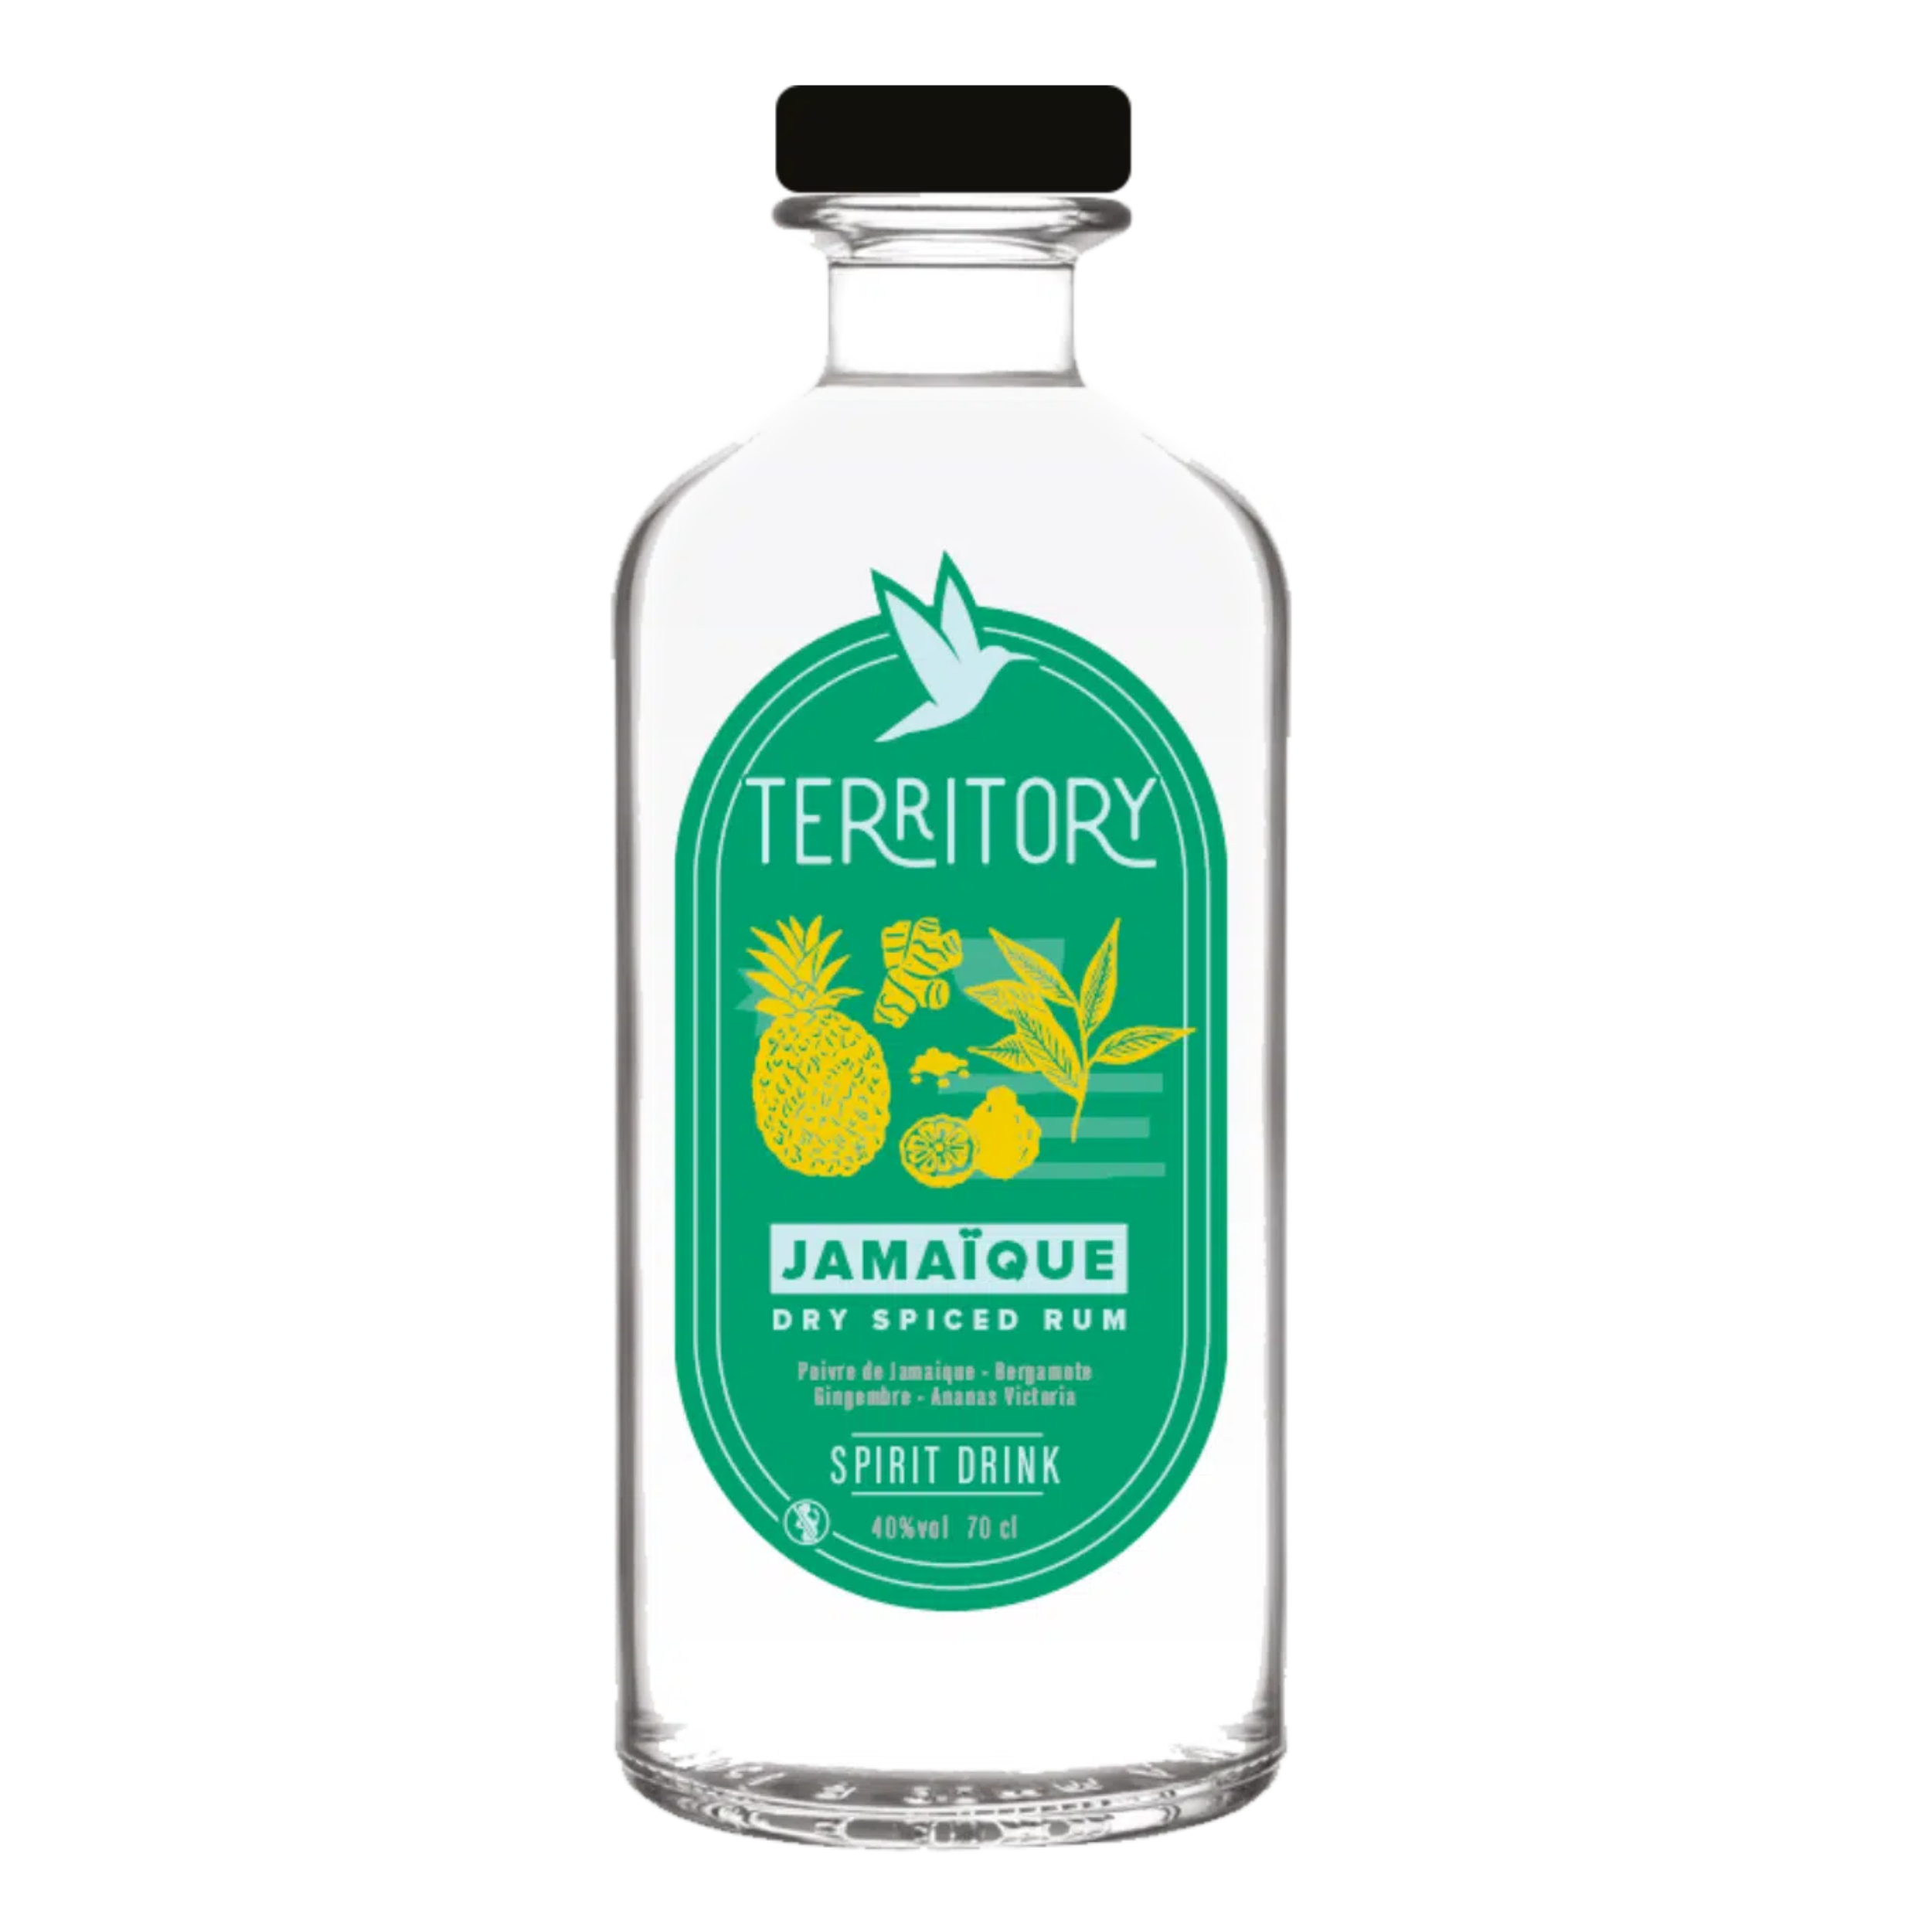 Territory - Jamaique - Dry Spiced Rum - Maison Ferroni - 40° - 70 cl